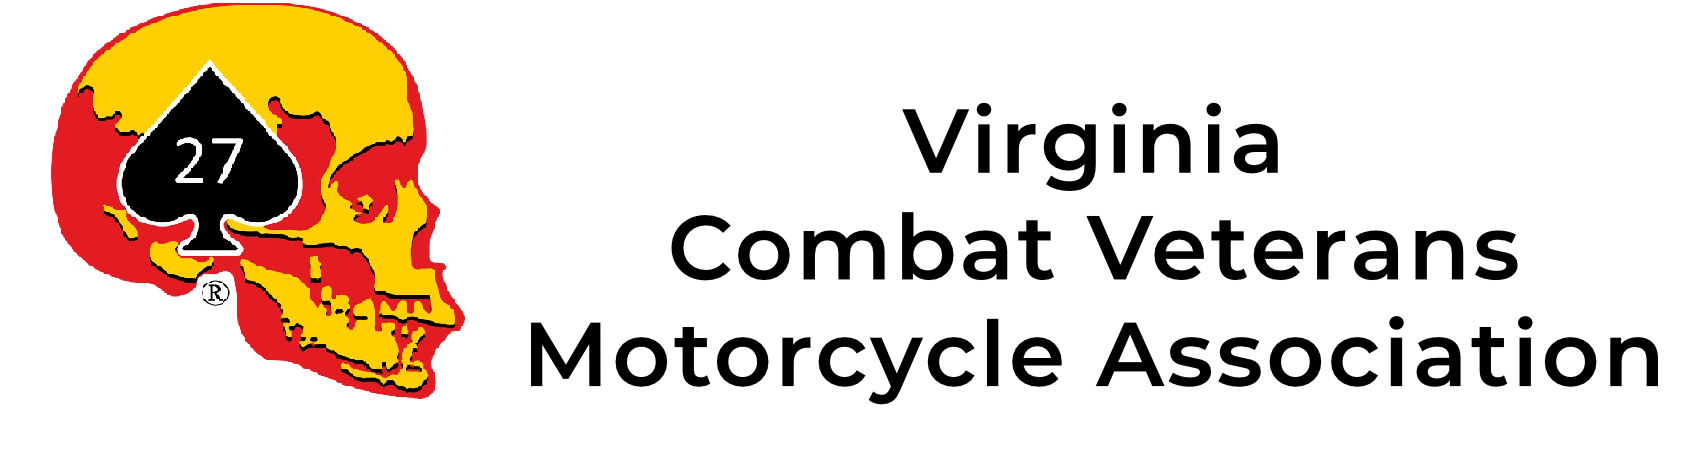 Virginia Combat Veterans Motocycle Association